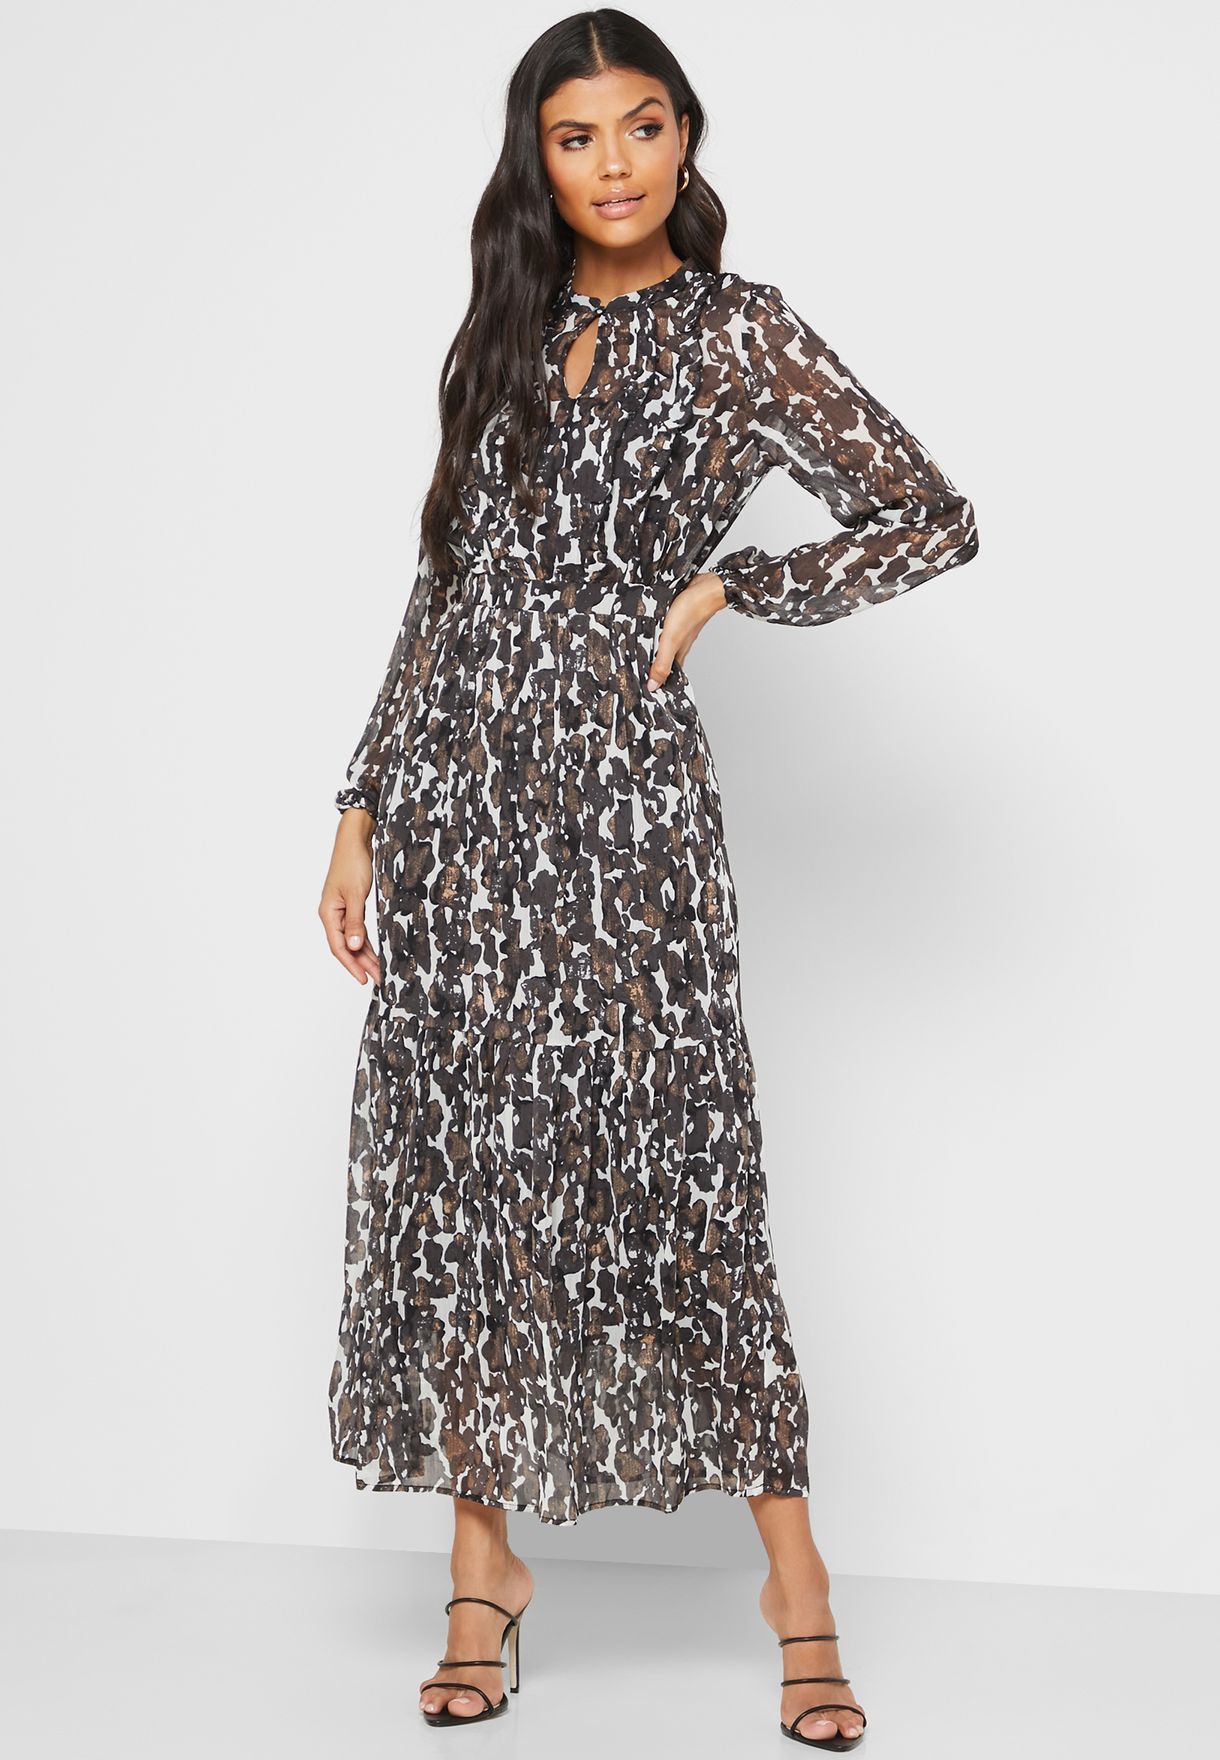 Buy Vero Moda prints Printed Mesh Sleeve Dress Women in MENA, Worldwide